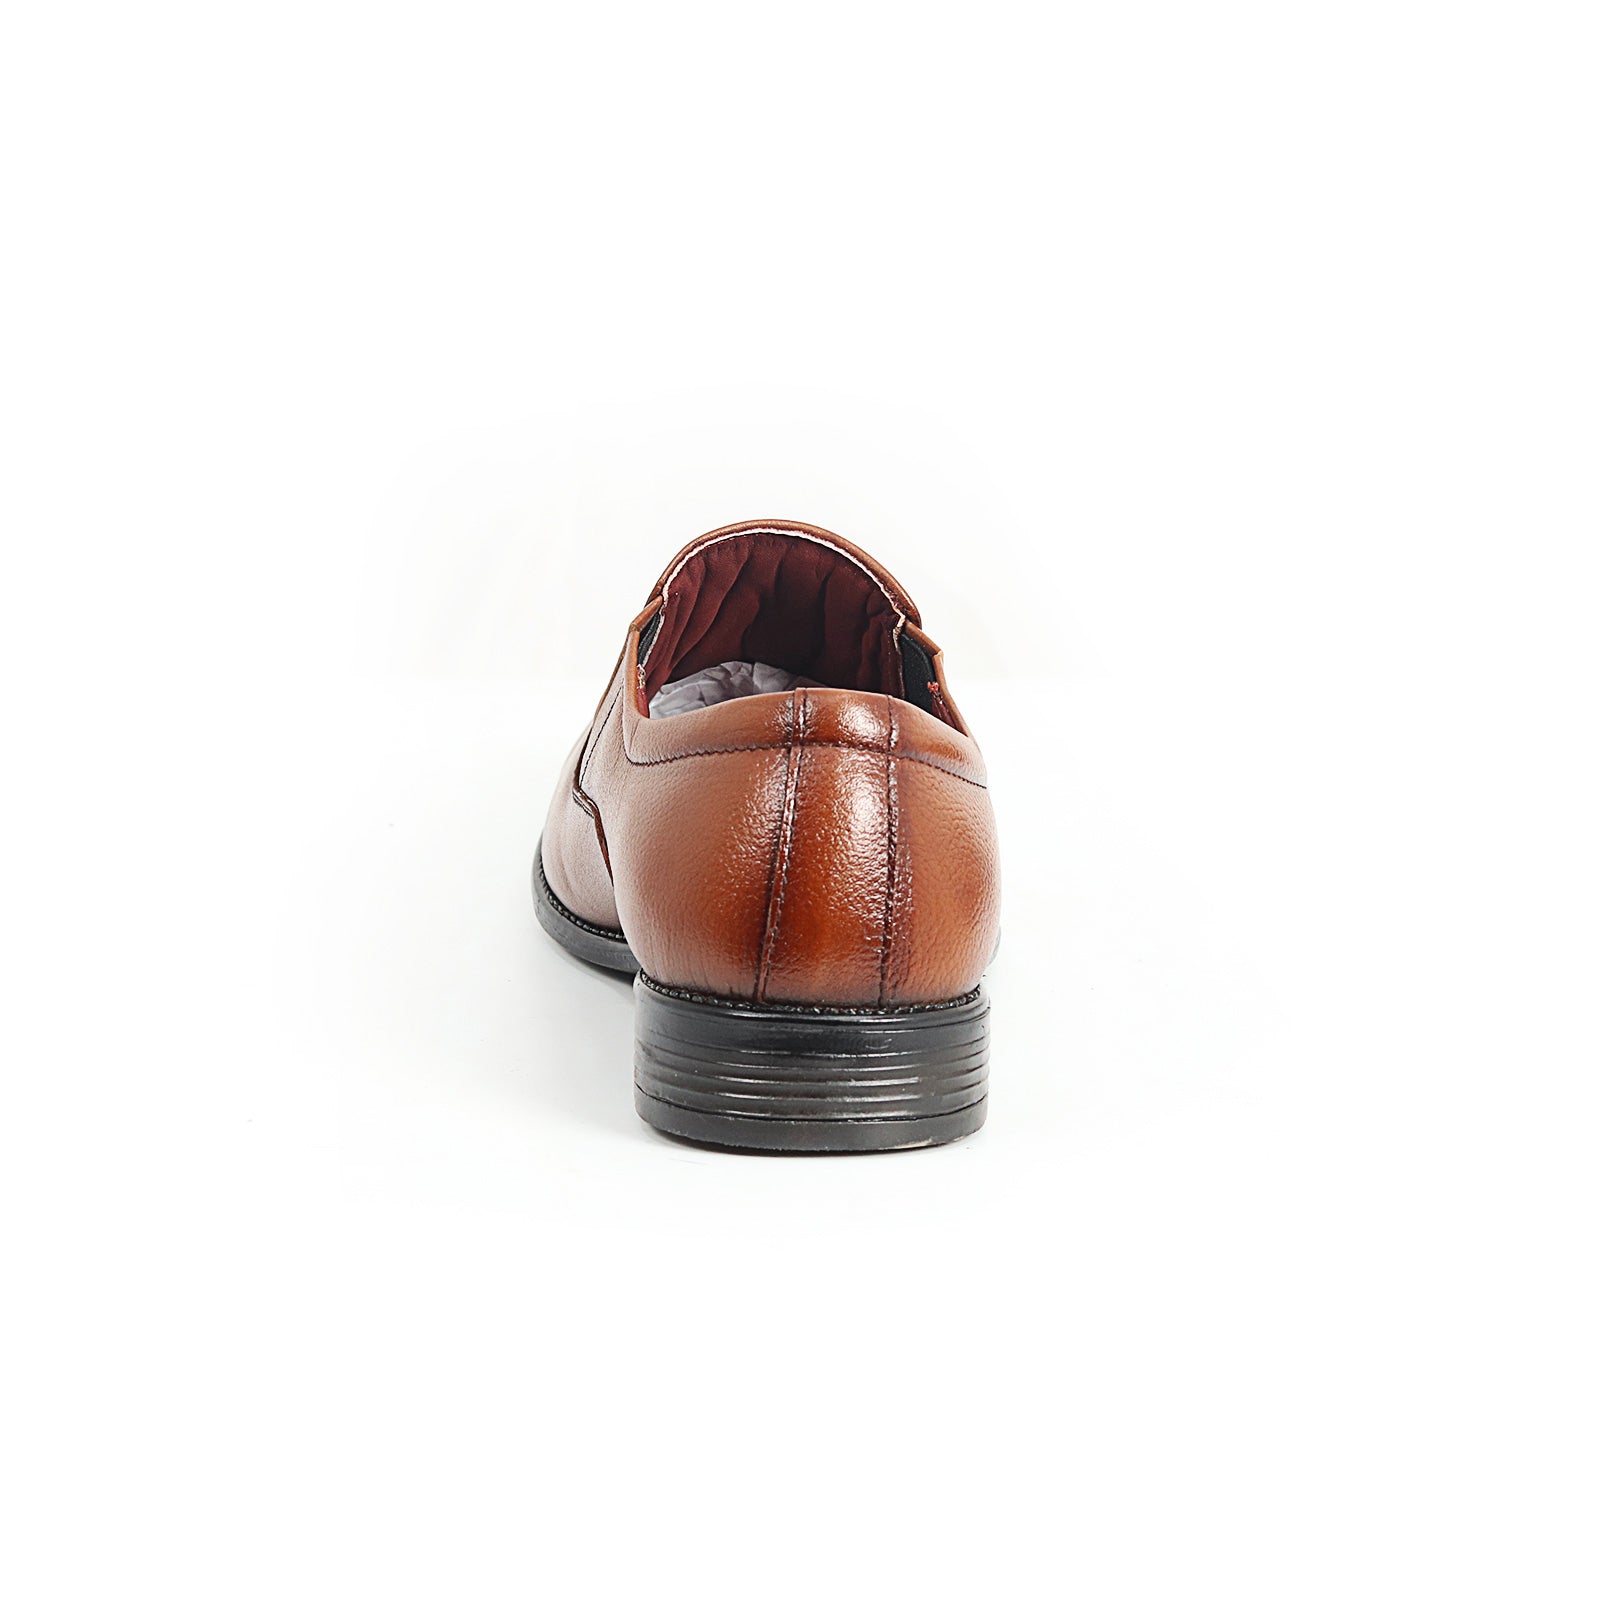 Zays Premium Leather Formal Shoe For Men (Brown) - ZAYSSF24